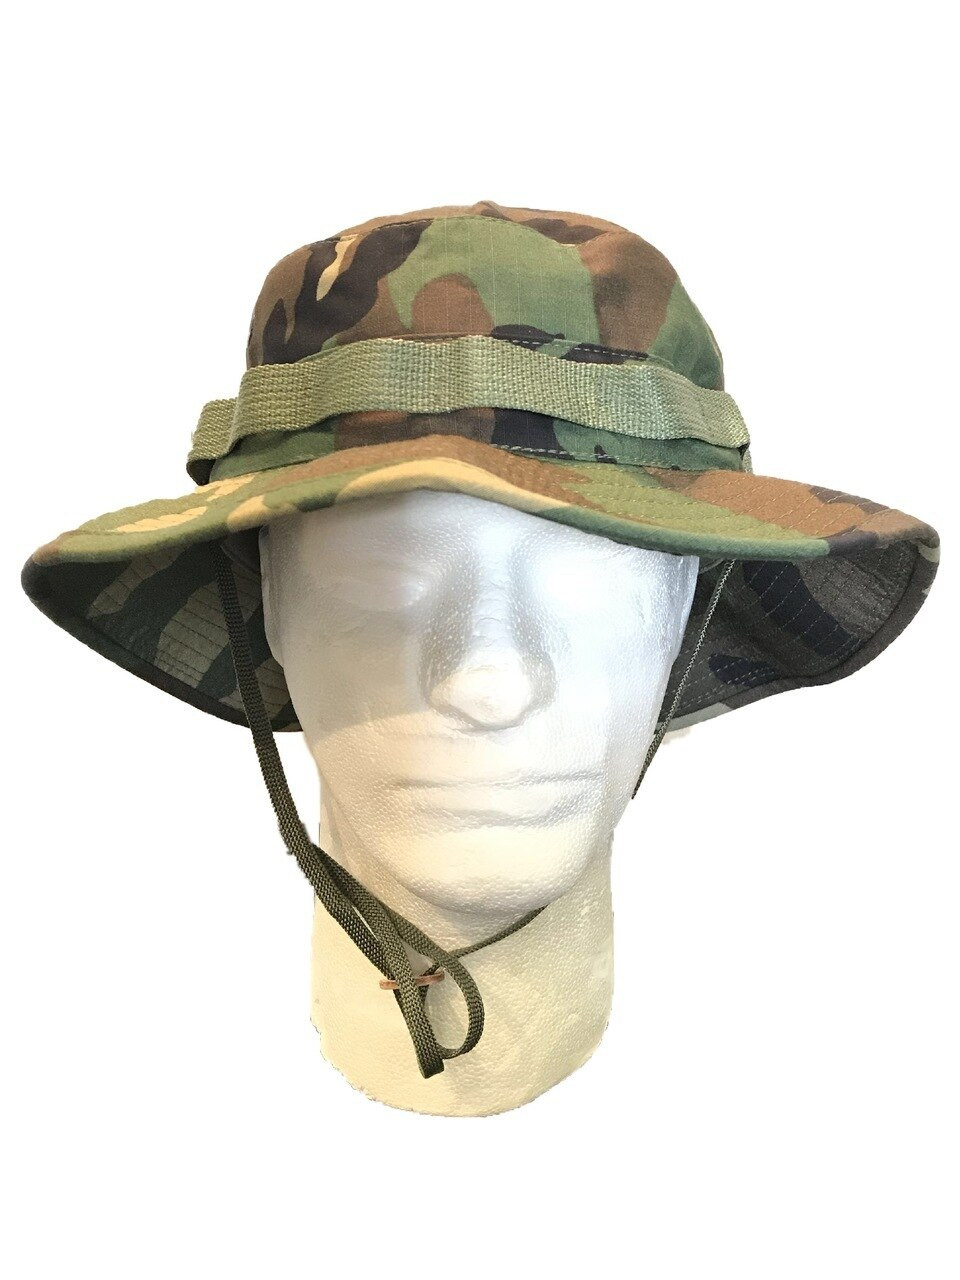 Original Military Issue Boonie Bush Hat 50/50 Nylon Cotton Made in